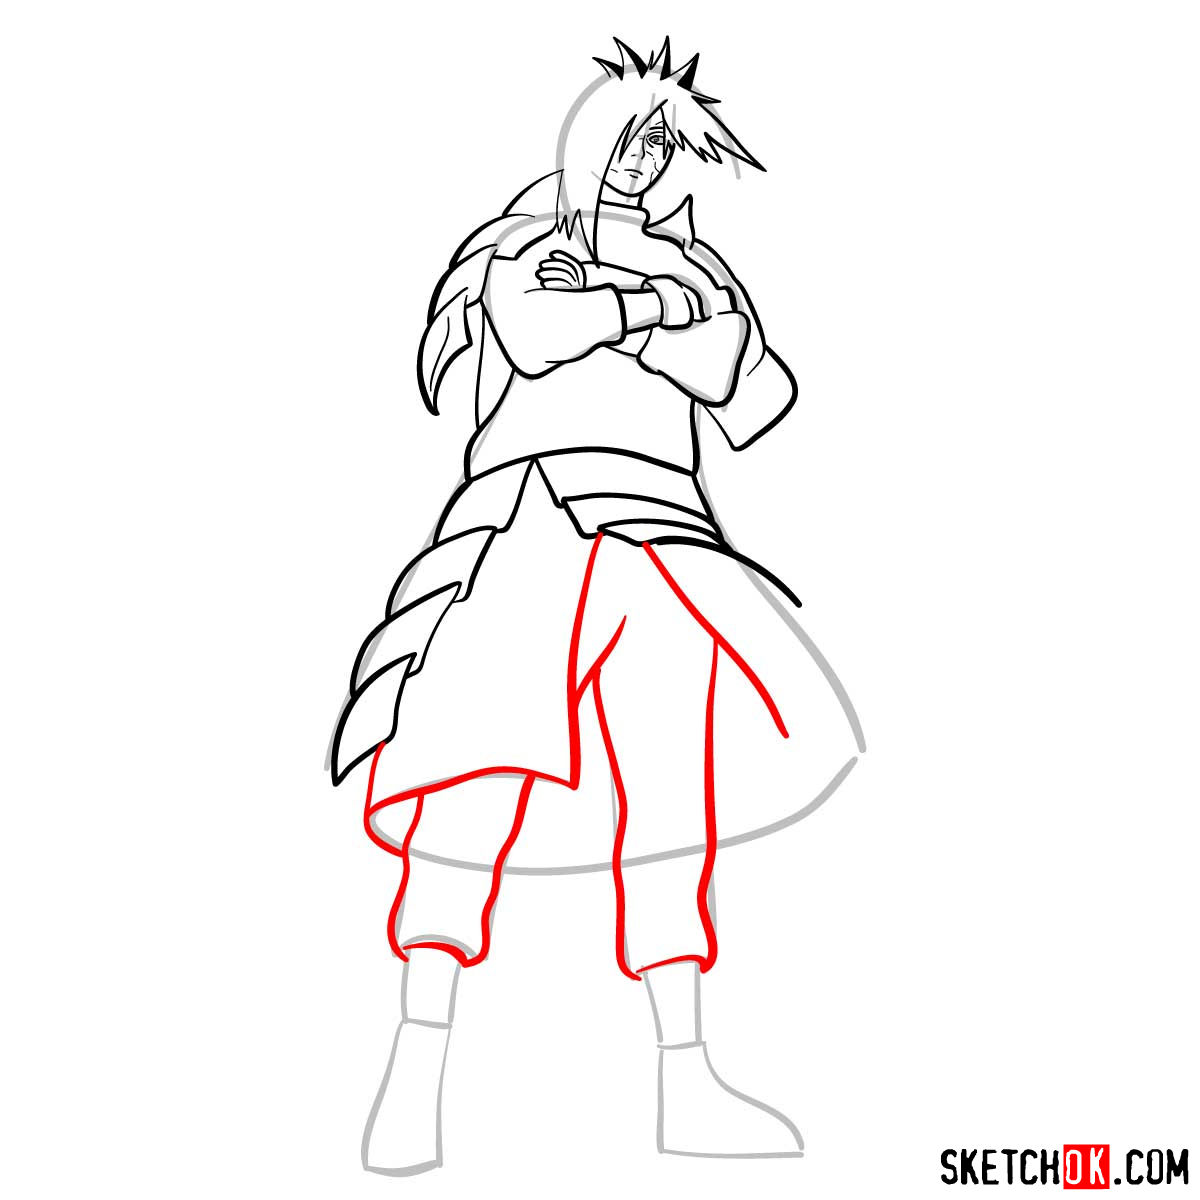 How to draw Madara Uchiha from Naruto anime - step 11